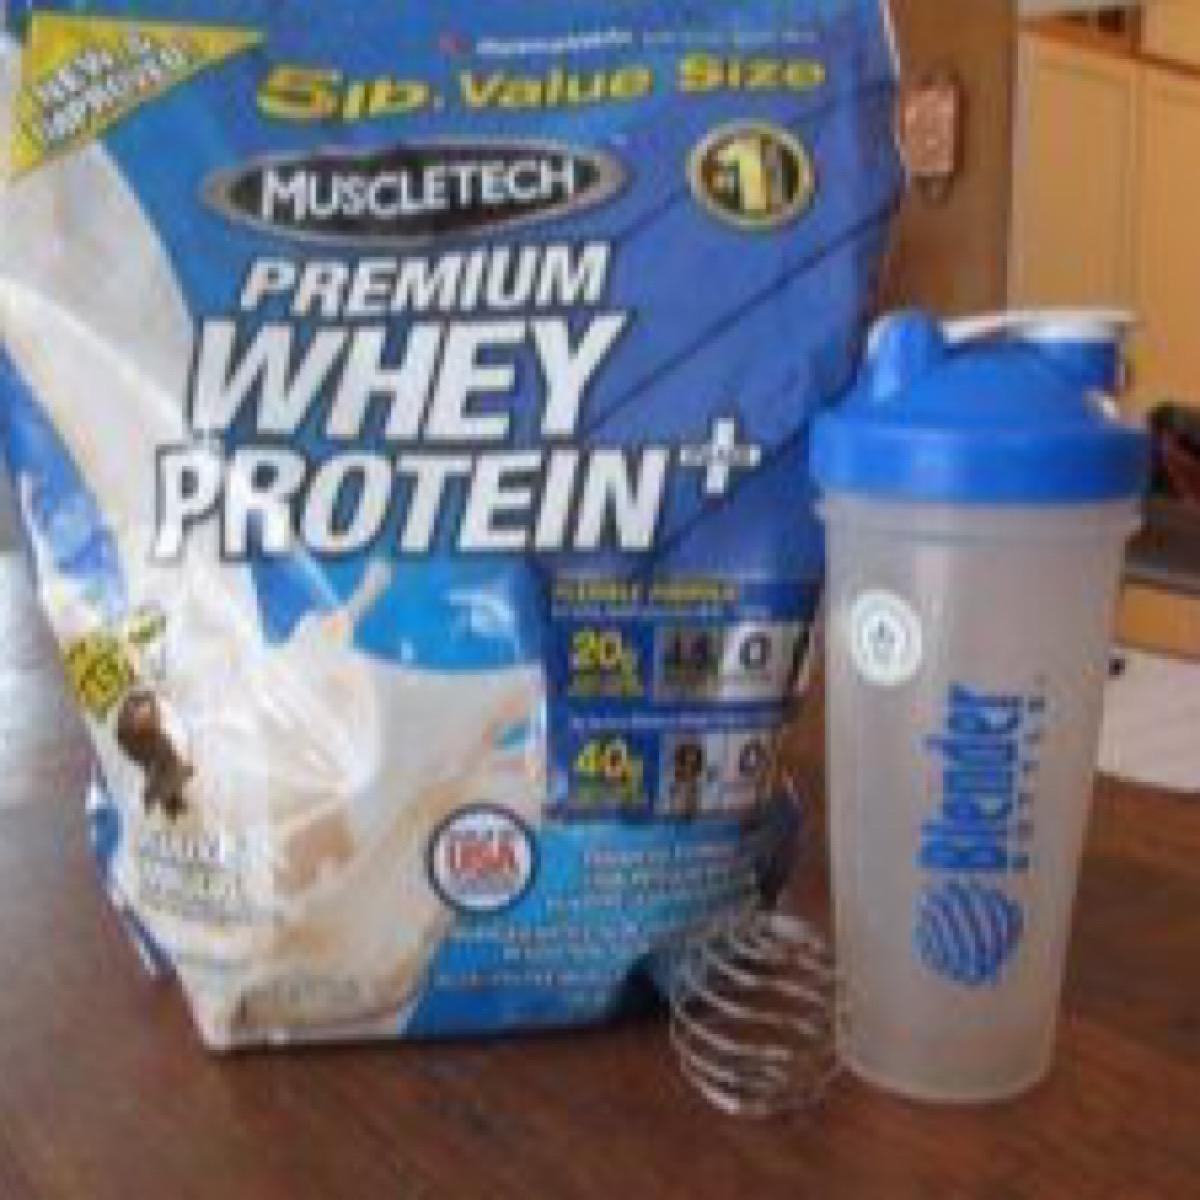 Protein powder and blender bottle